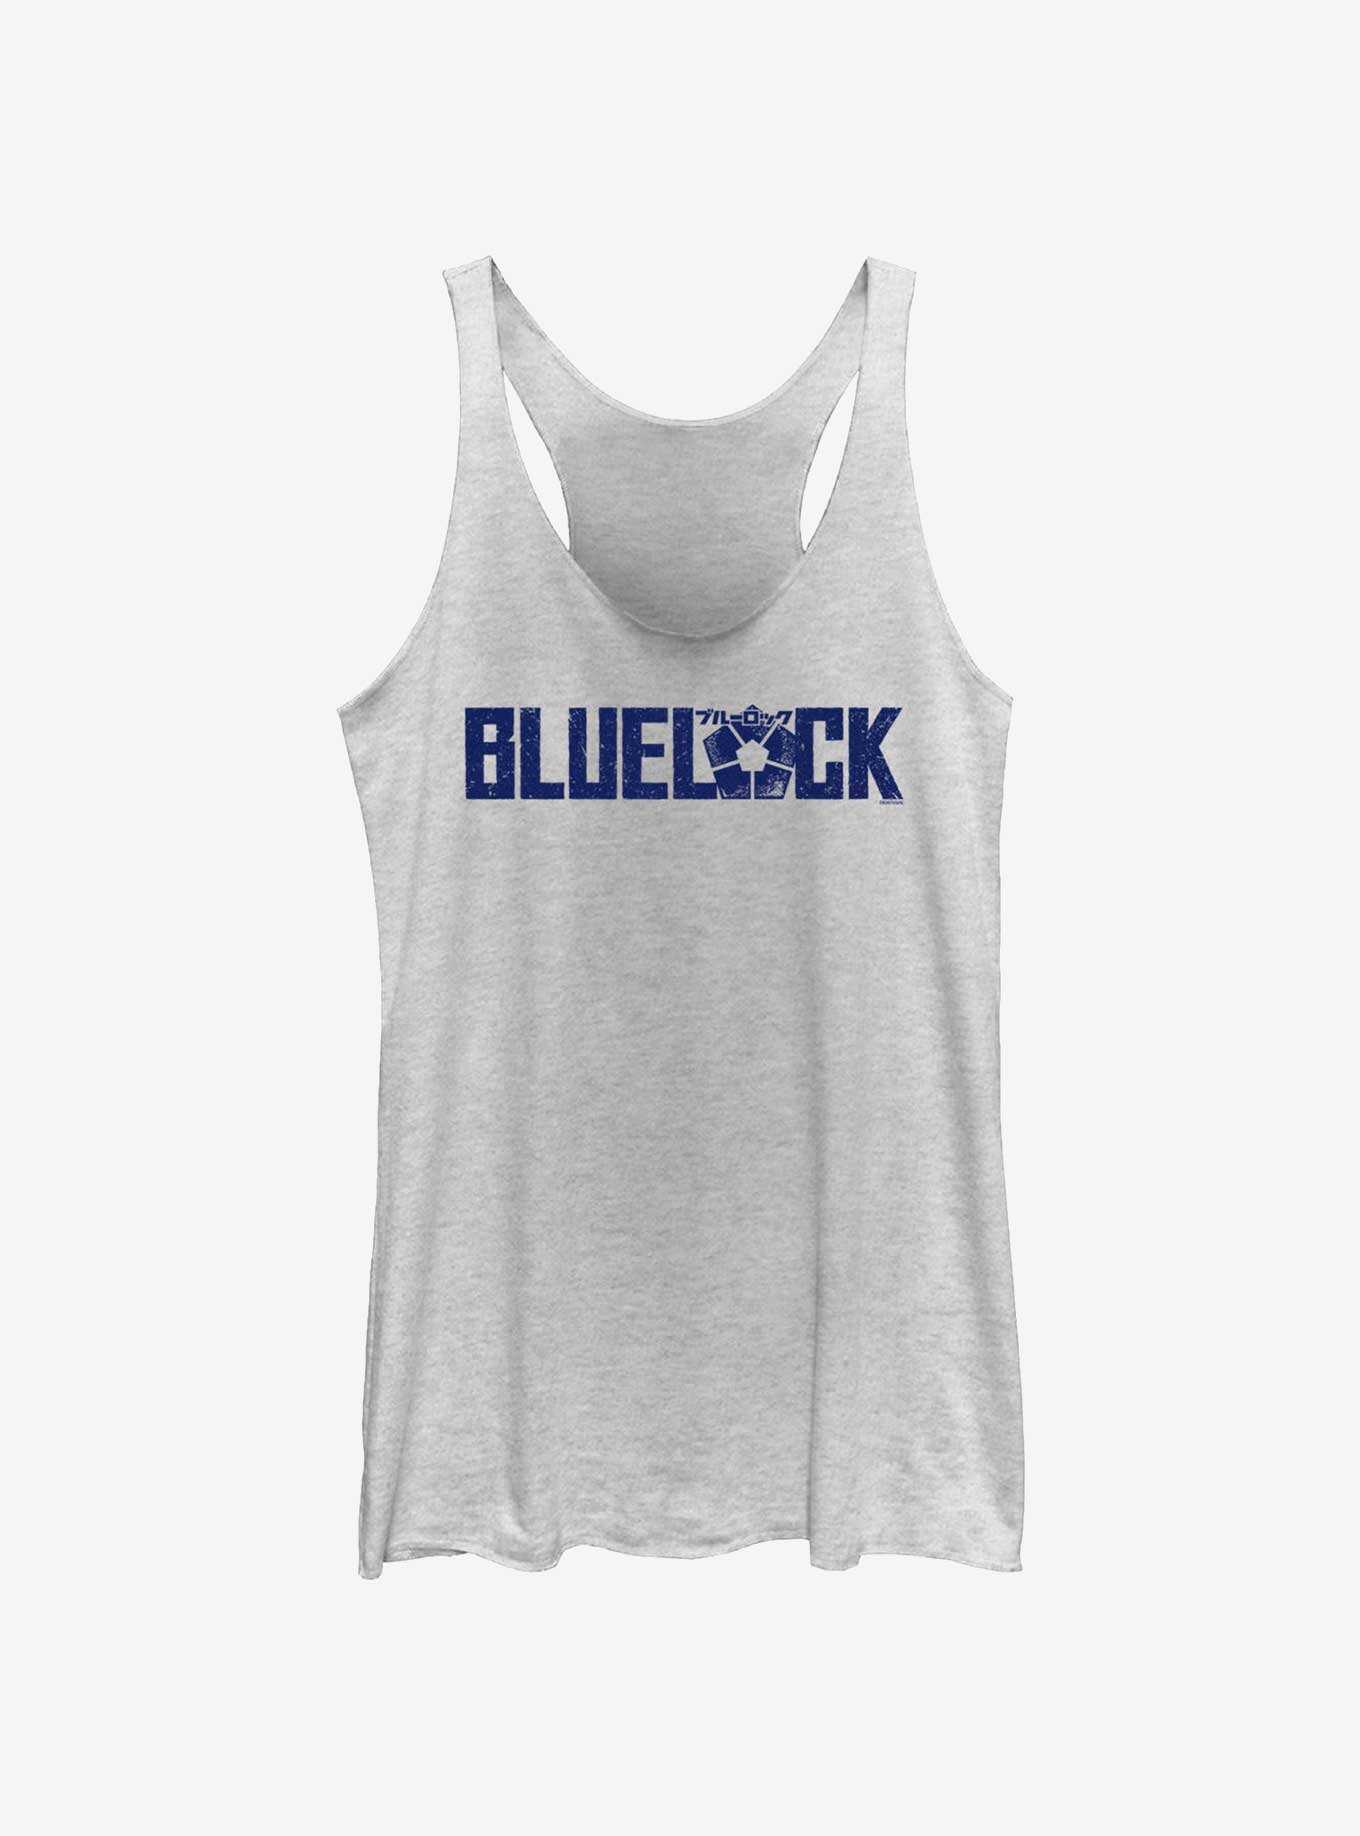 Blue Lock Glitch Logo Girls Tank, , hi-res